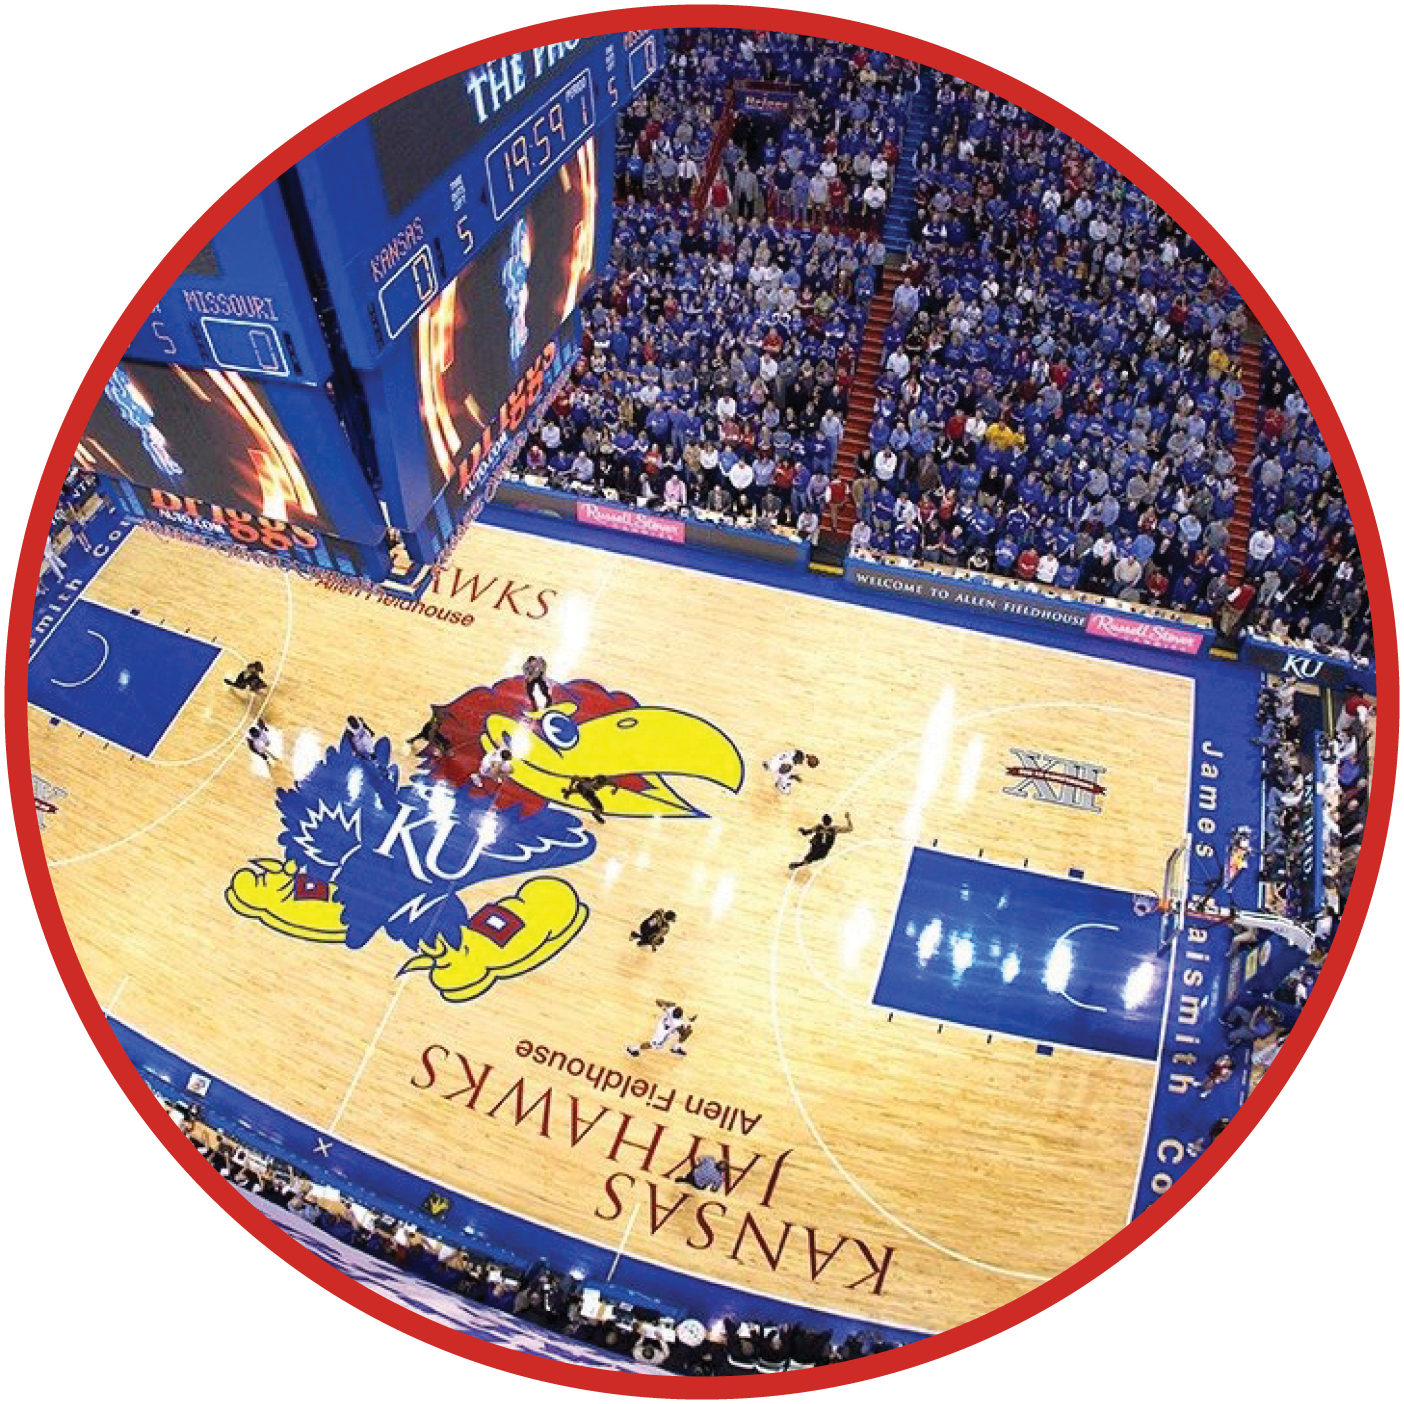 The basketball arena at the University of Kansas